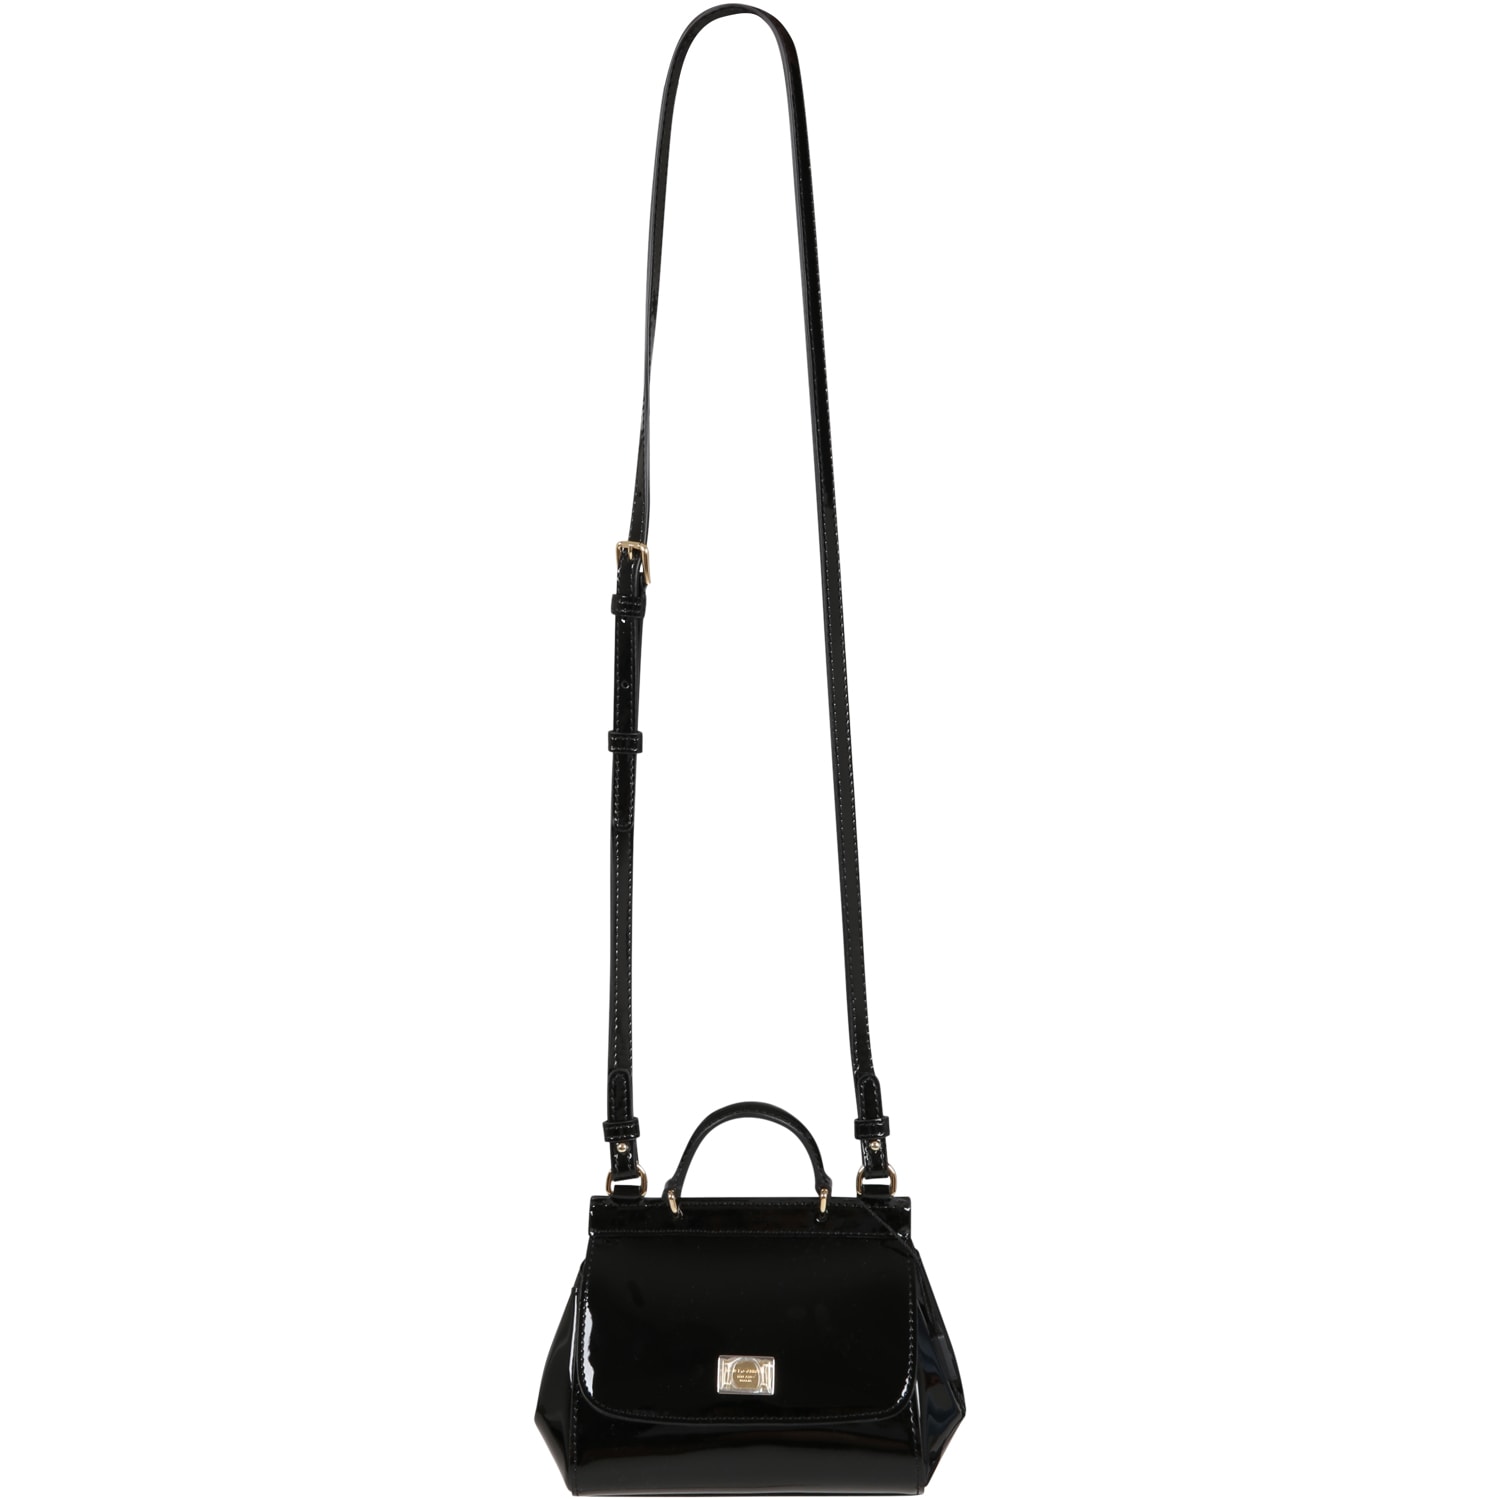 Dolce & Gabbana Black Bag For Girl With Logo